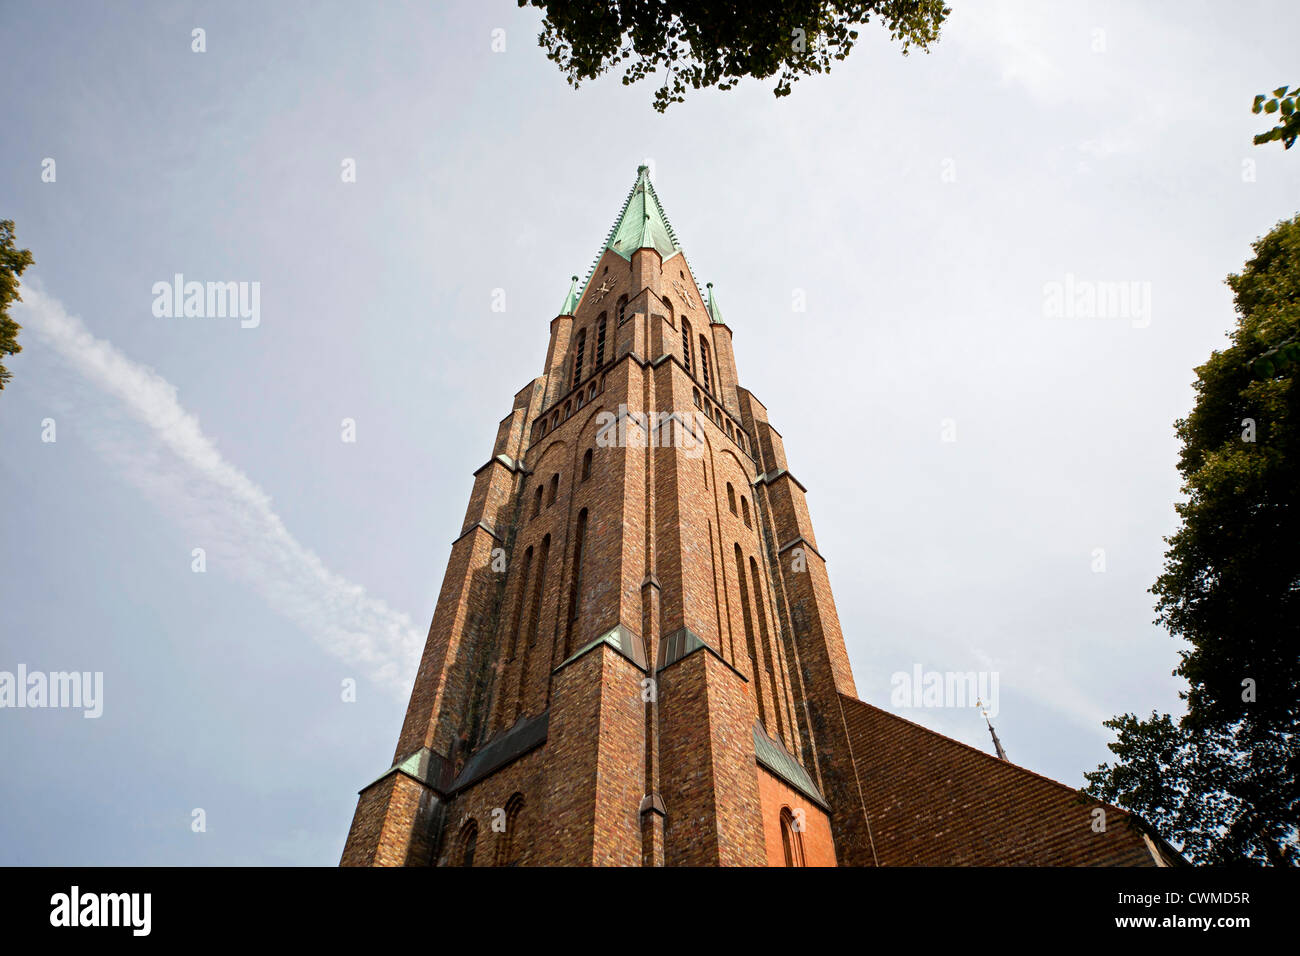 La Cathédrale de Schleswig, Schleswig, Schleswig-Holstein, Allemagne, Europe Banque D'Images